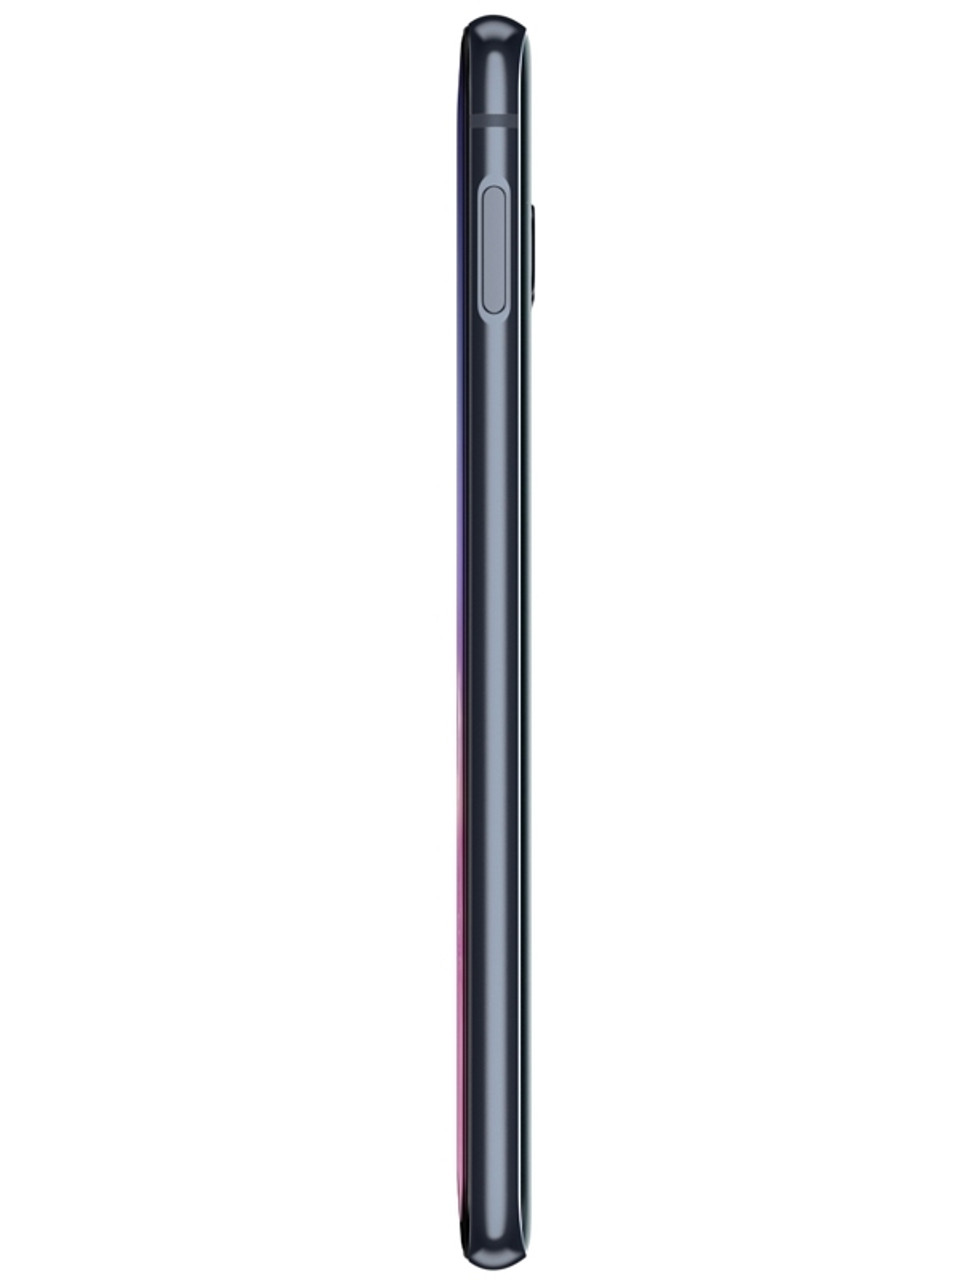 Brand New Samsung Galaxy S10e G970 128GB Phone Wholesale | Prism Black